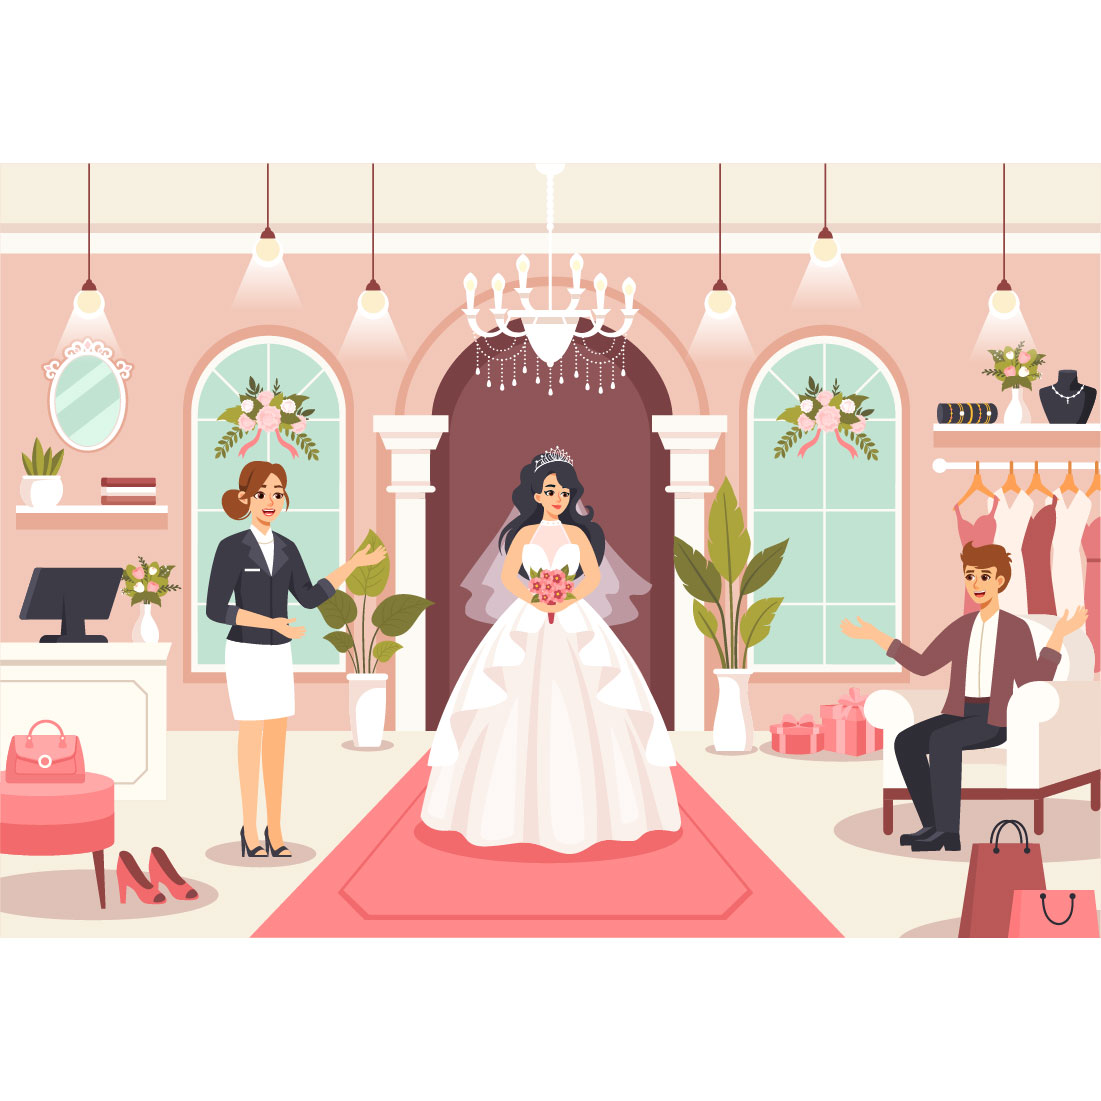 9 Wedding Shop Illustration preview image.